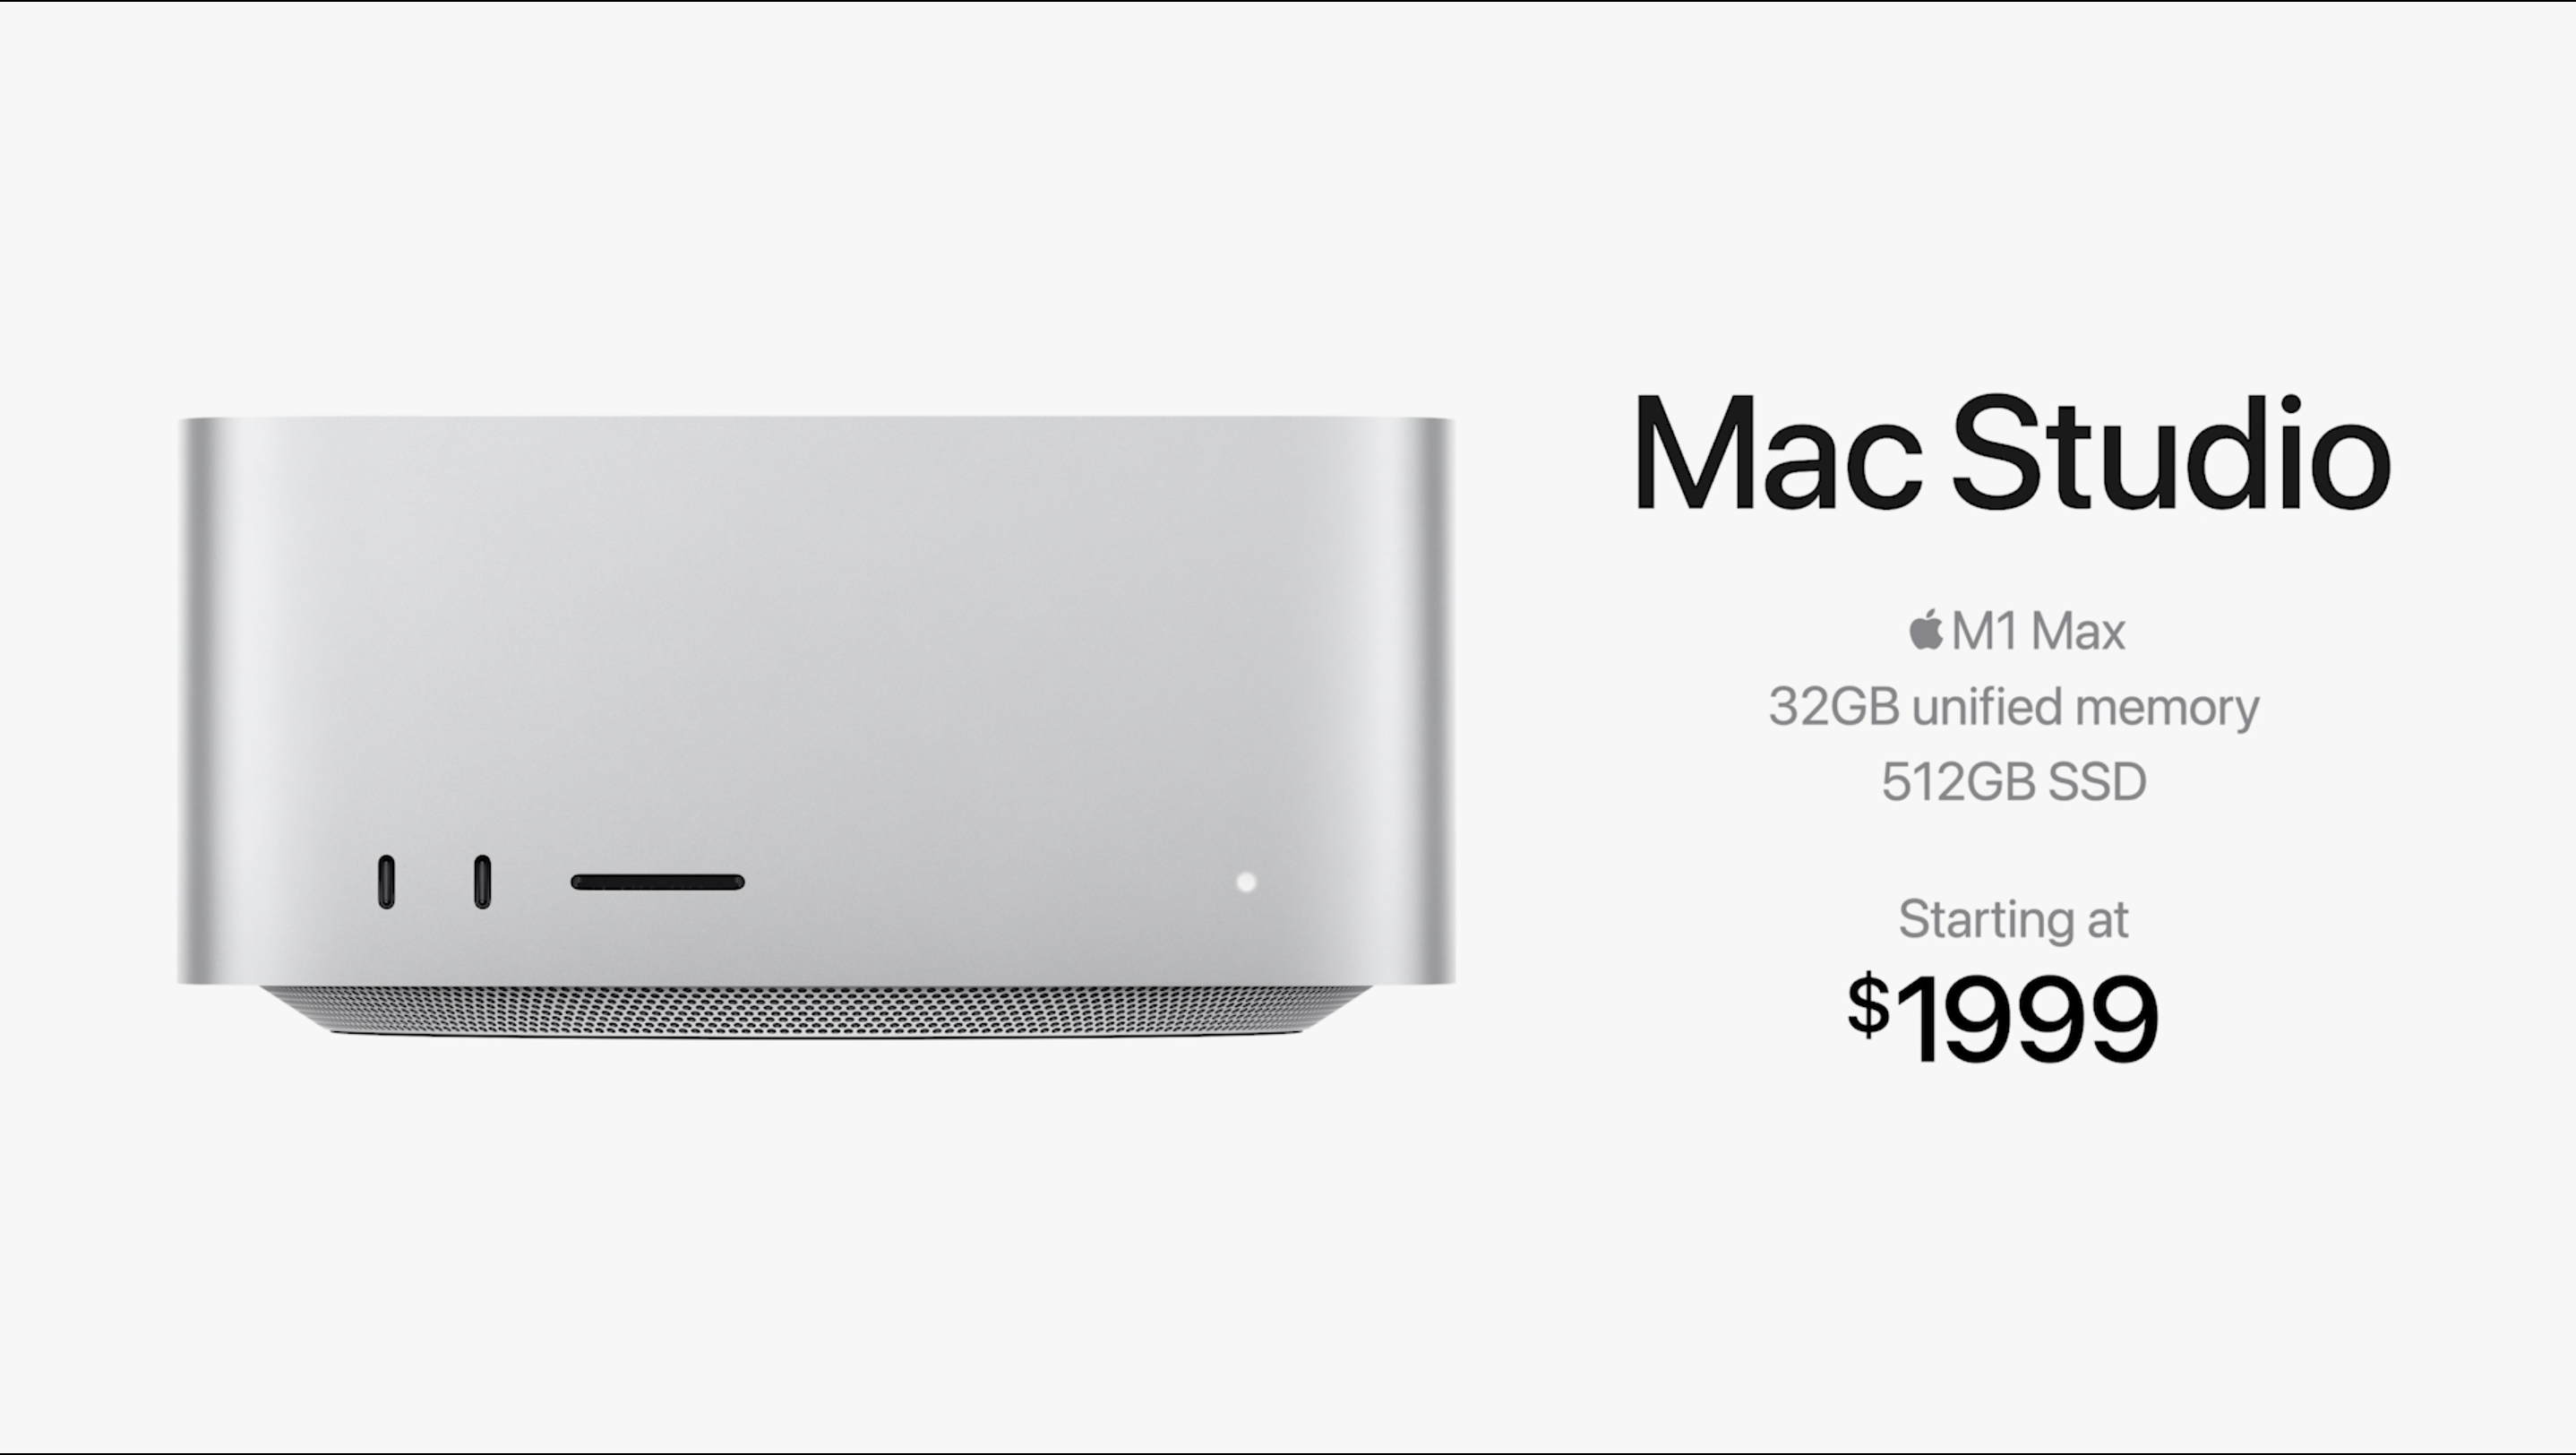 Mac Studio pricing reveal